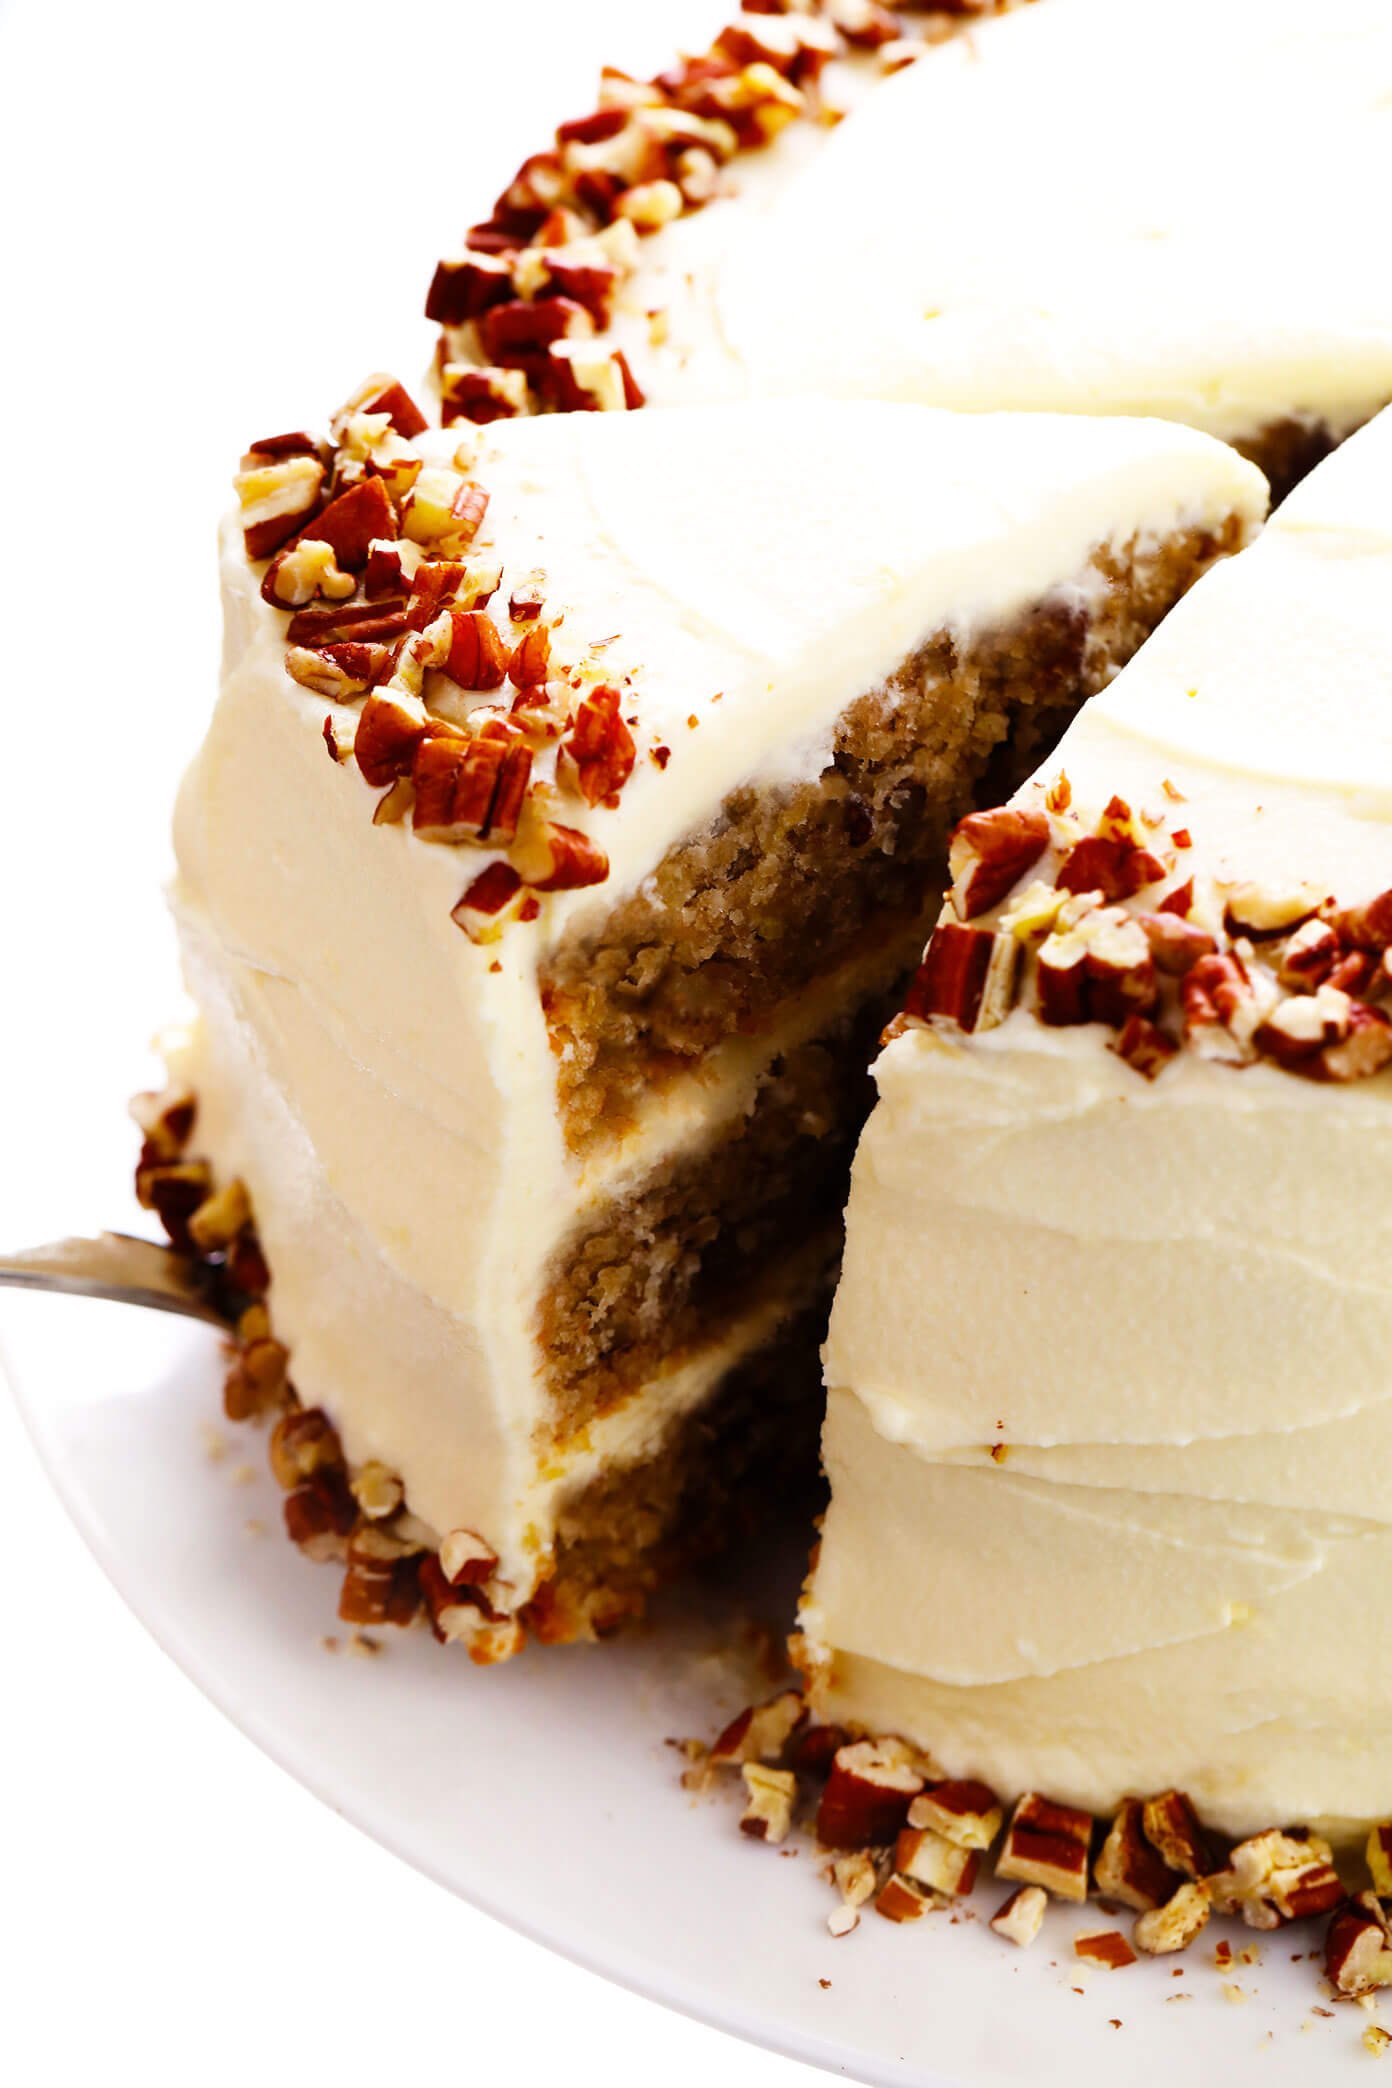 https://www.gimmesomeoven.com/wp-content/uploads/2021/03/Hummingbird-Cake-Recipe-with-Cream-Cheese-Frosting-2.jpg